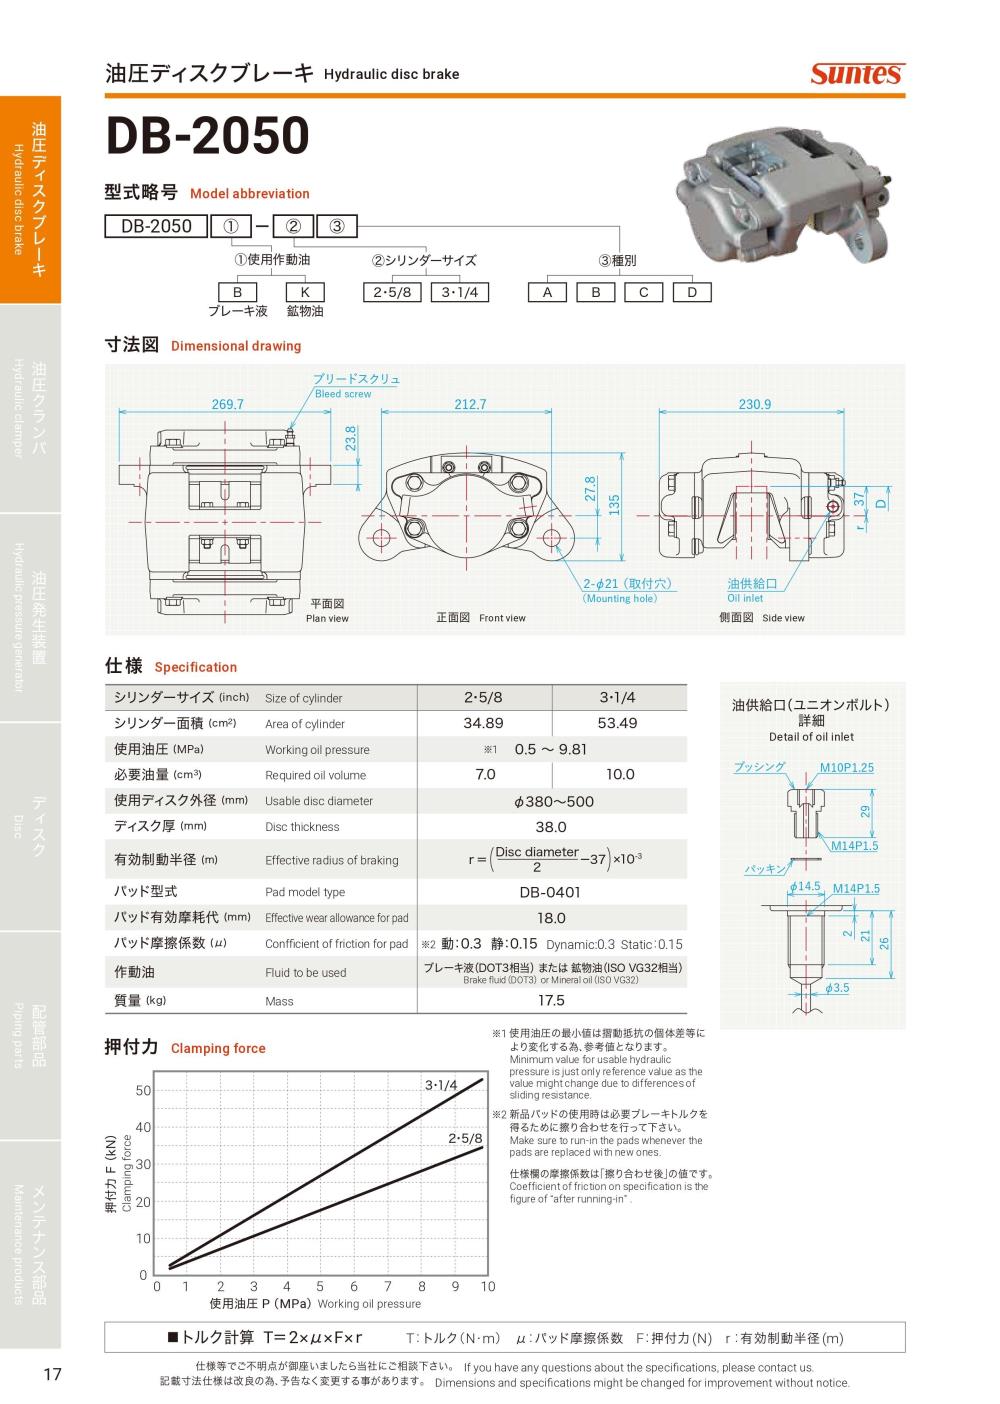 SUNTES Hydraulic Disc Brake DB-2050K Series,DB-2050K-2 5/8A, DB-2050K-2 5/8B, DB-2050K-2 5/8C, DB-2050K-2 5/8D, DB-2050K-3 1/4A, DB-2050K-3 1/4B, DB-2050K-3 1/4C, DB-2050K-3 1/4D, SUNTES, Hydraulic Disc Brake,SUNTES,Machinery and Process Equipment/Brakes and Clutches/Brake